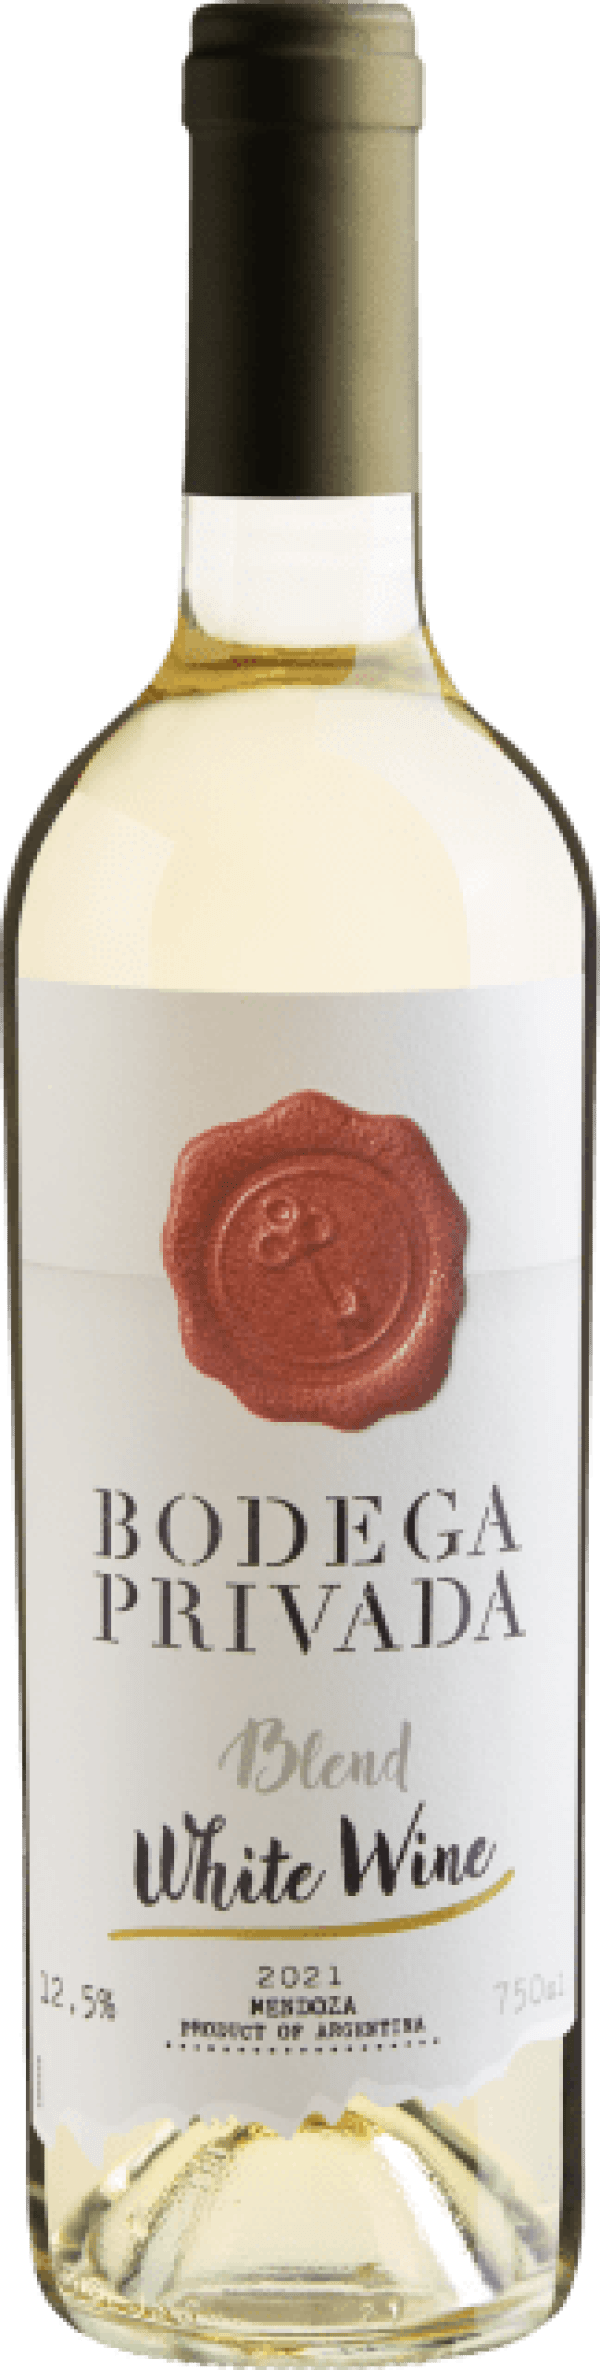 Bodega Privada Blend White Wine 2021